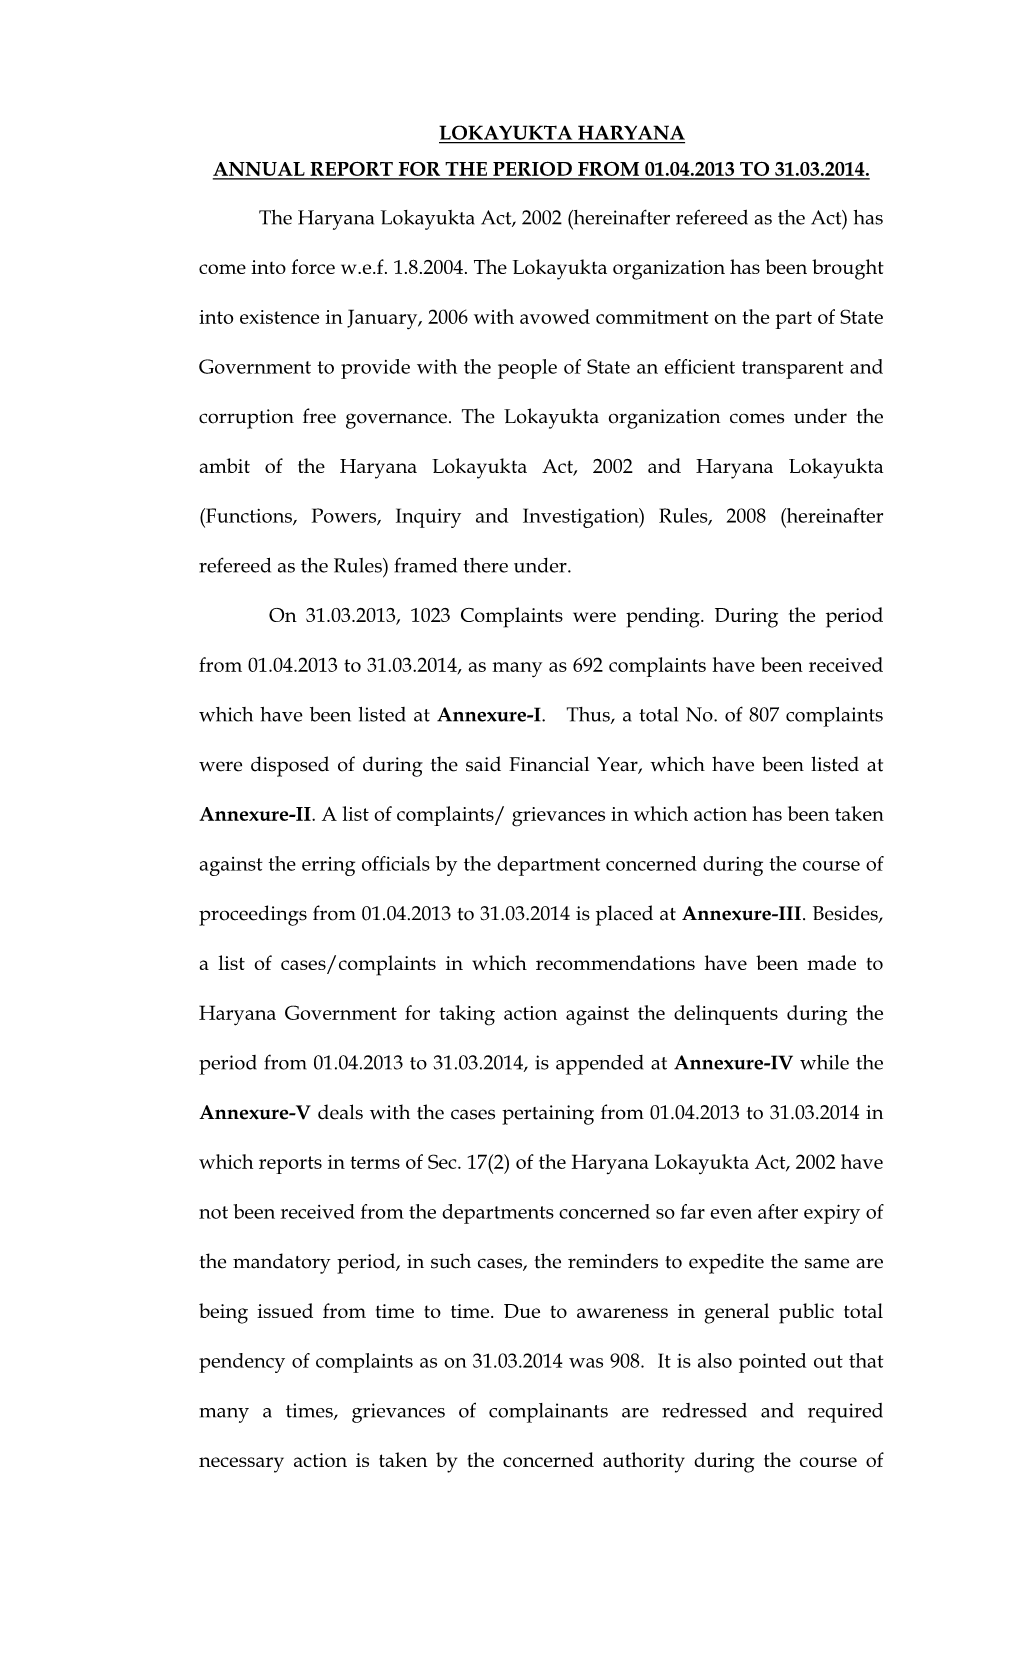 LOKAY KTA HARYANA ANN AL REPORT for the PERIOD from 01.04.2013 to 31.03.2014. the Ha Yana Lokayukta Act, 2002 (He Einafte